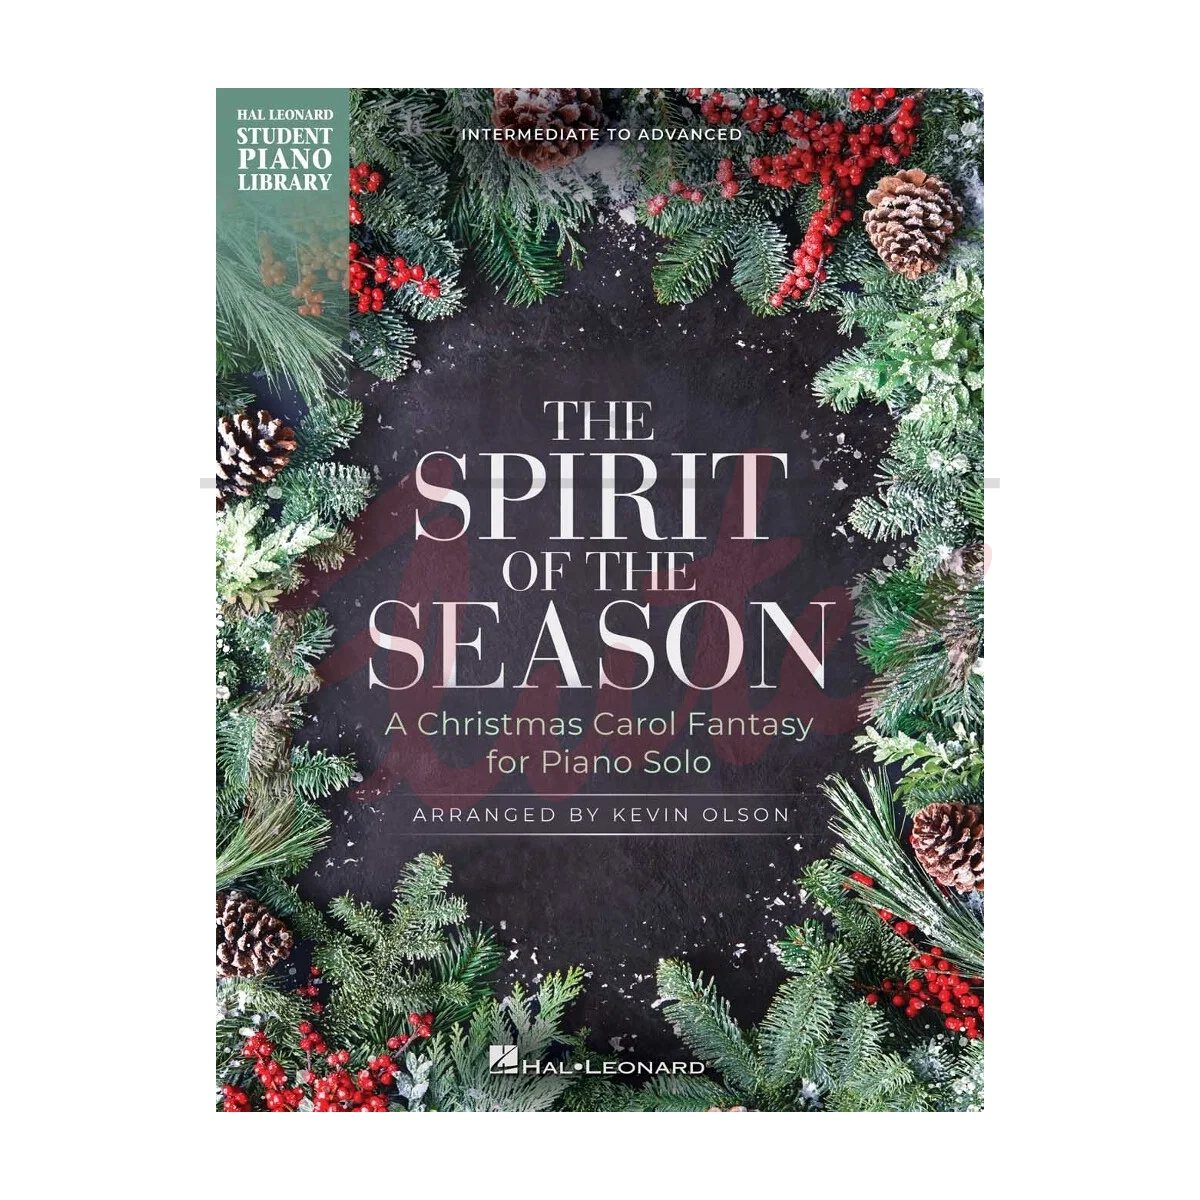 The Spirit of the Season: A Christmas Carol Fantasy for Piano Solo